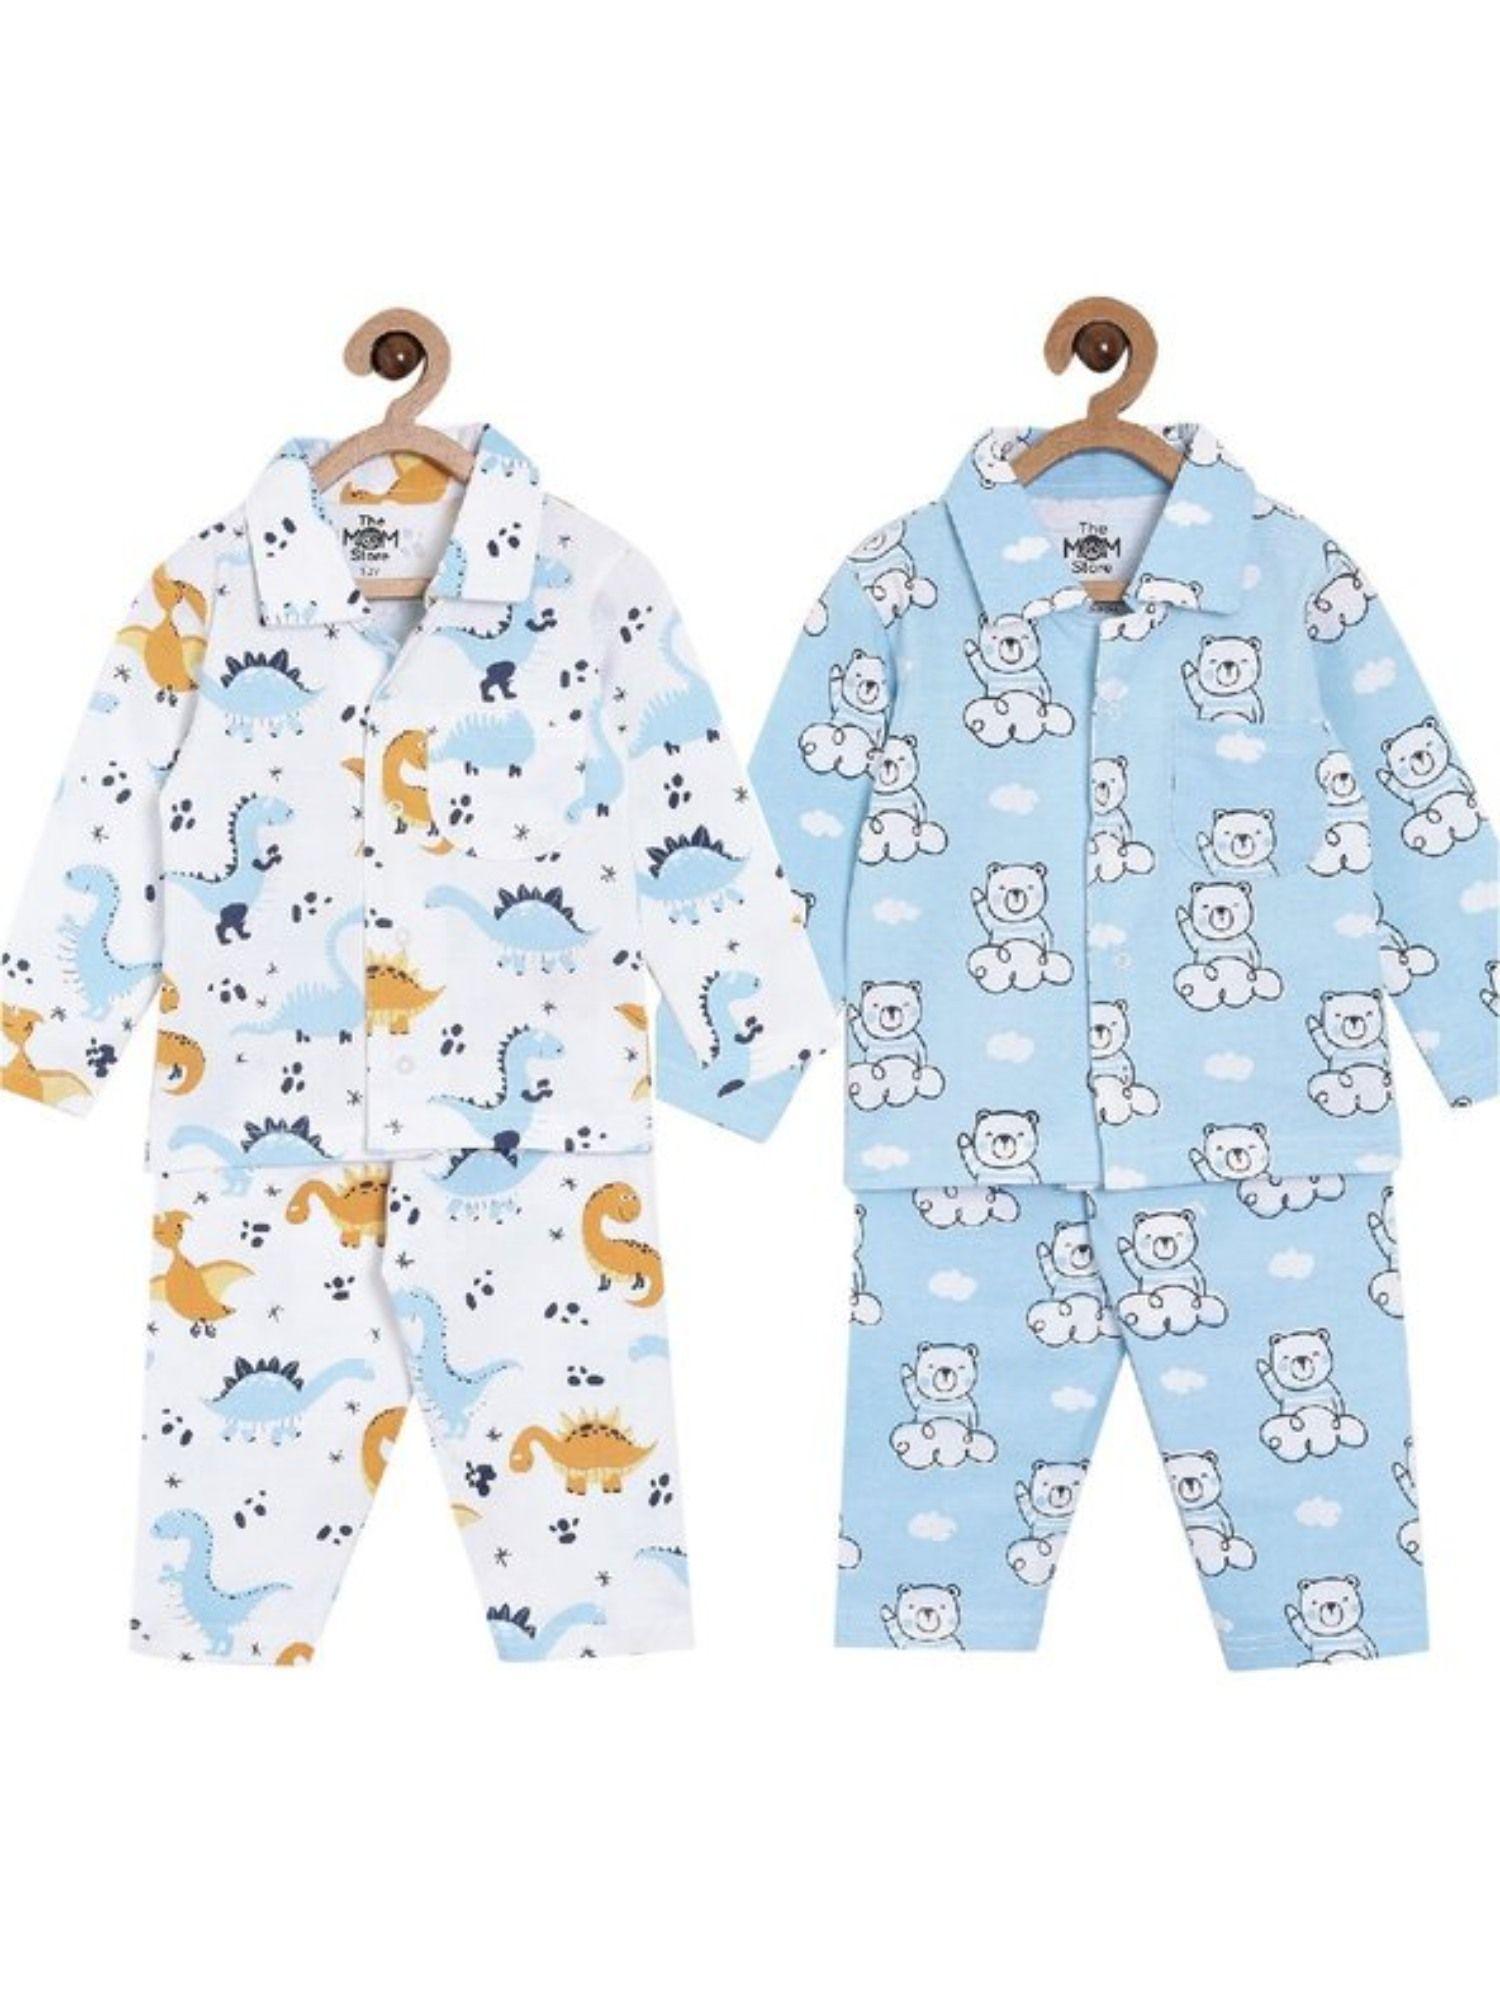 combo of 2 baby pyjama sets - dino trip & hello bear (set of 4)